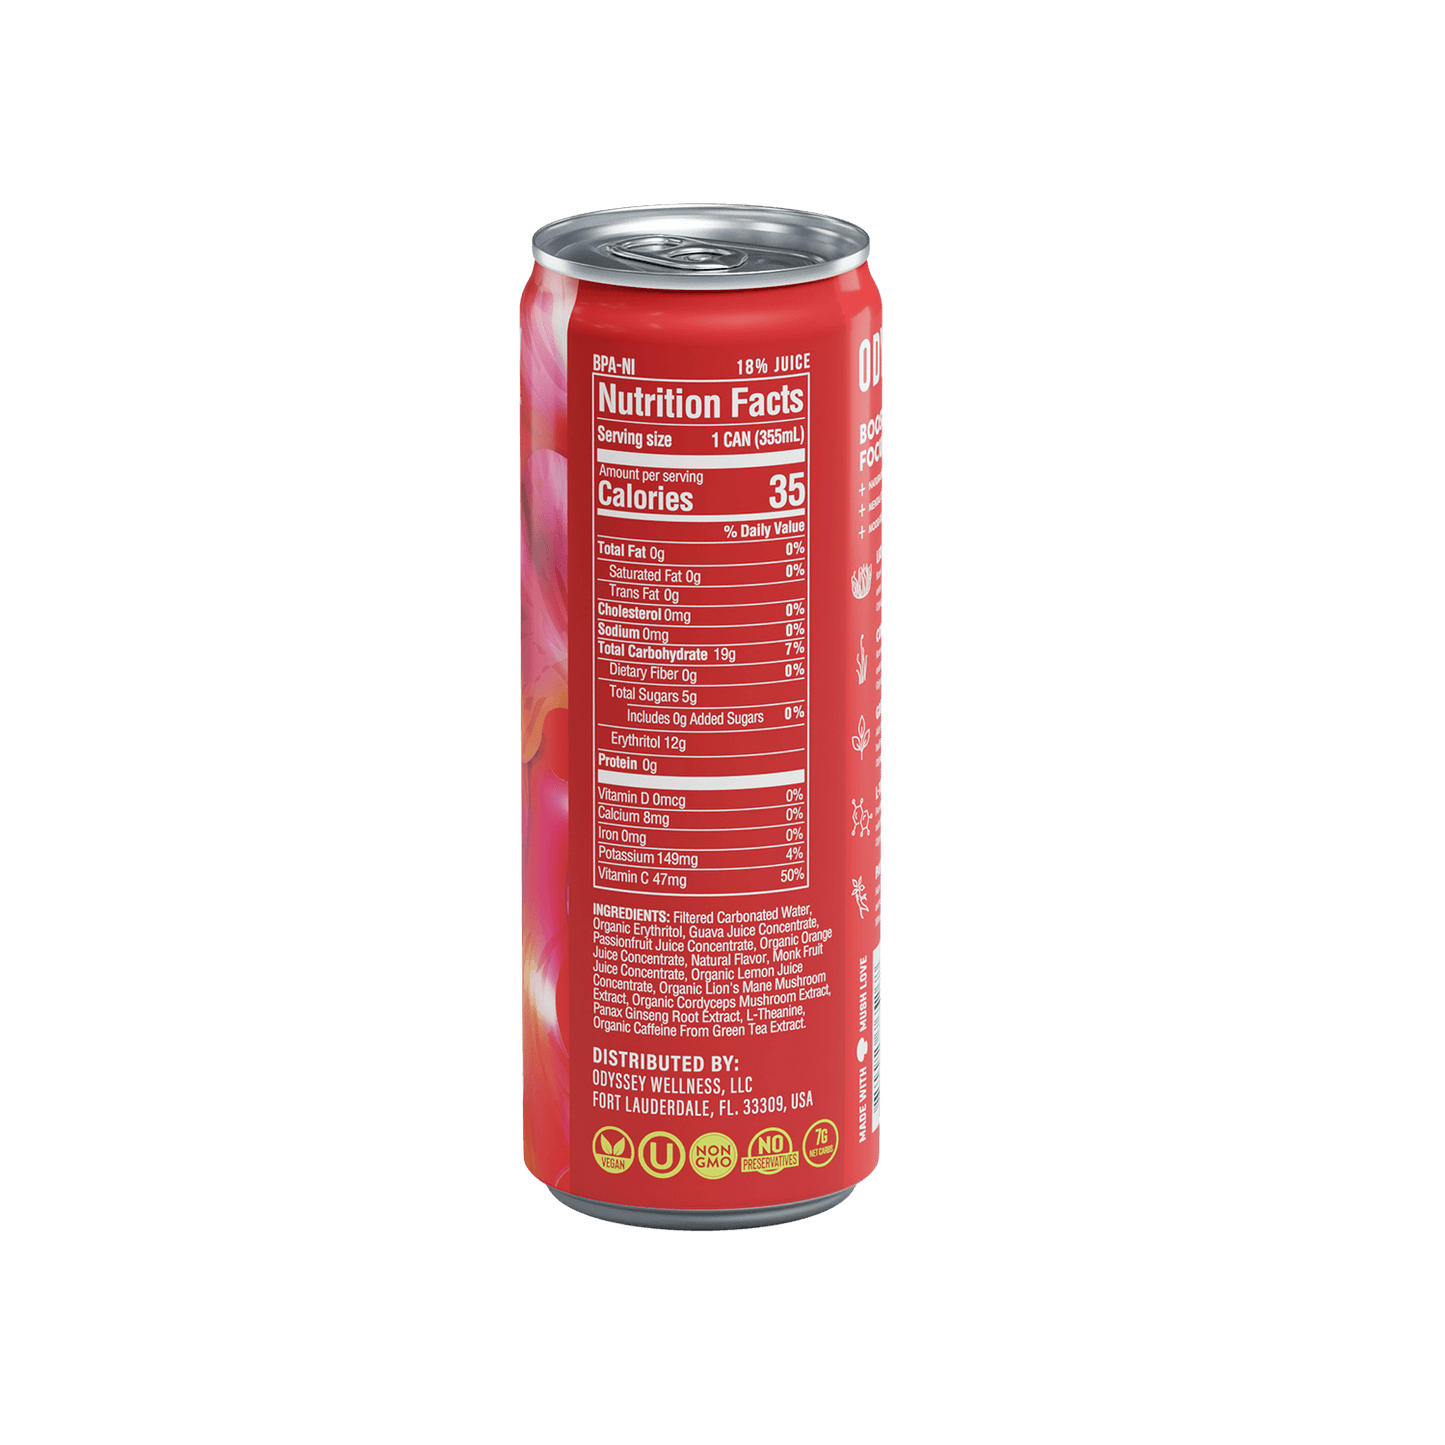 Passion Fruit Orange Guava Core Sparkling Energy Drink - 85mg Caffeine - 12 Pack